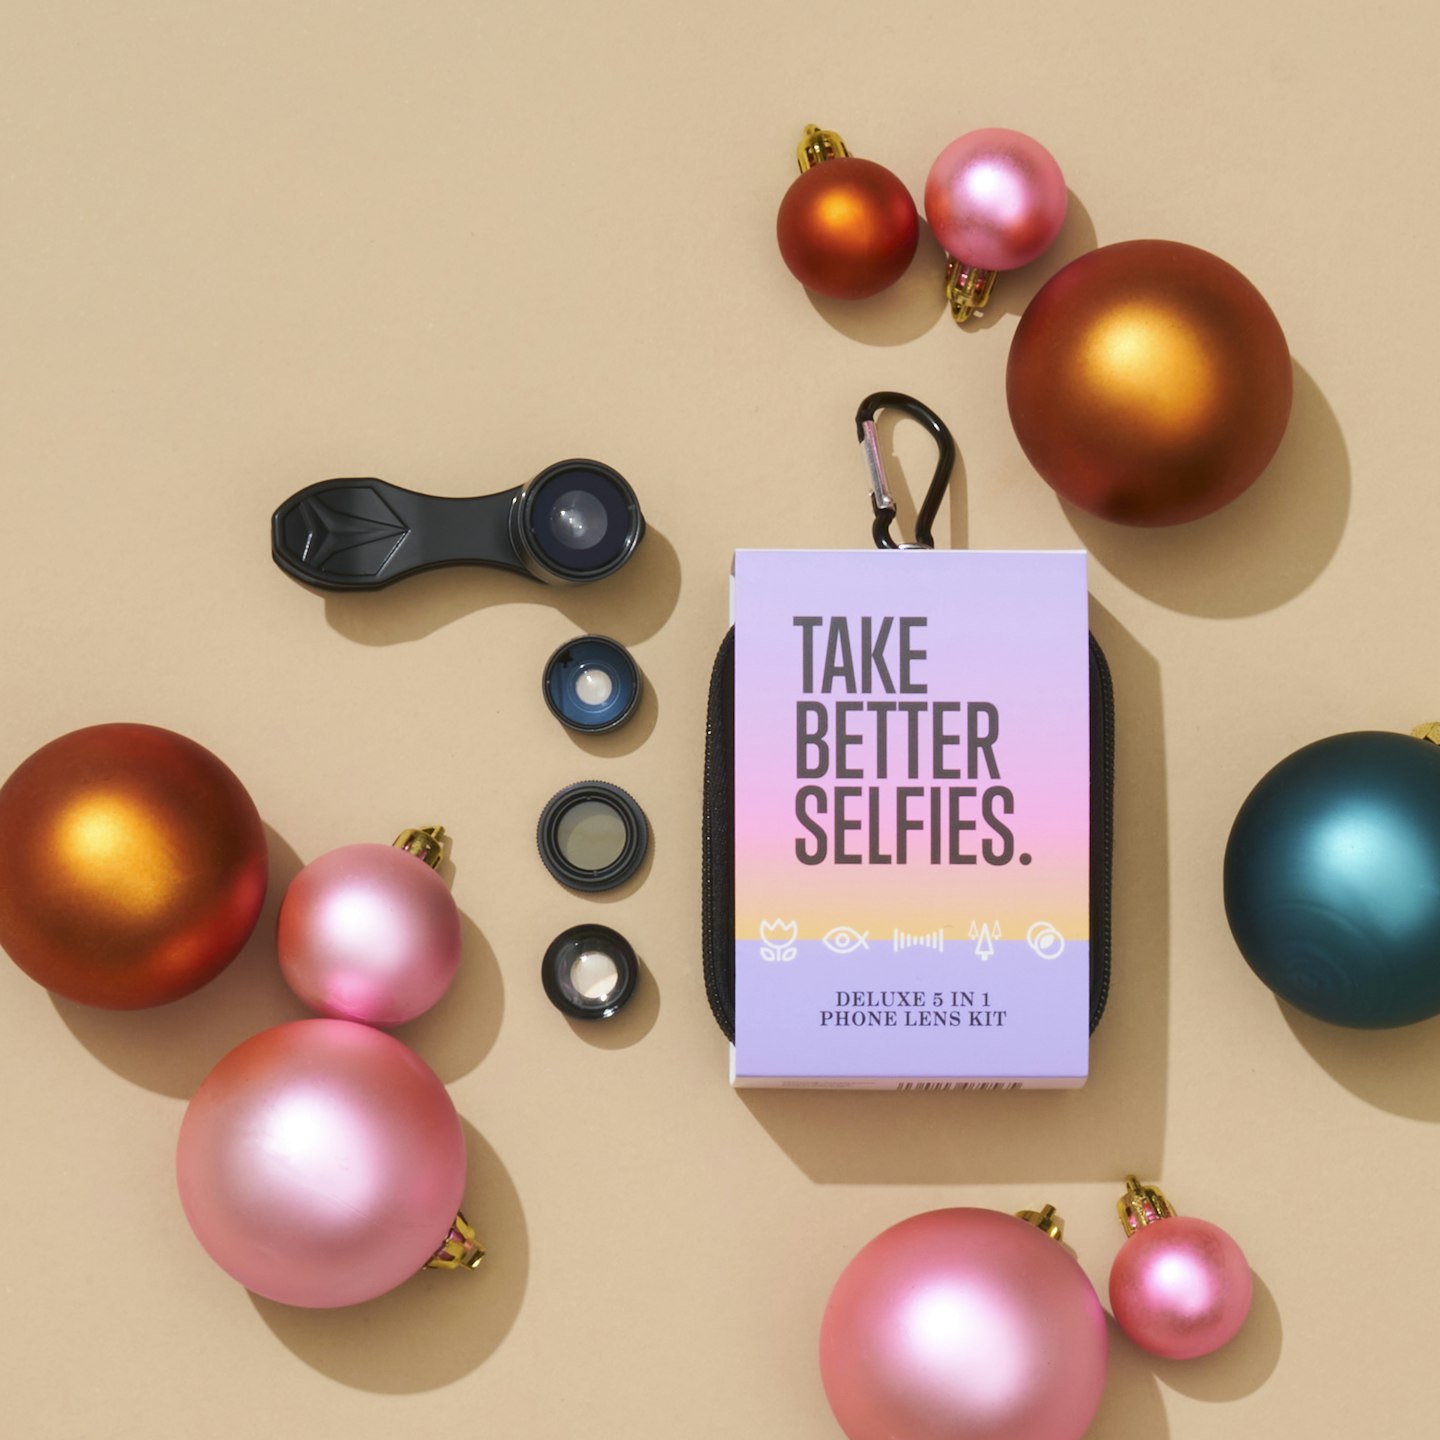 Selfie Phone Lens Kit, Firebox